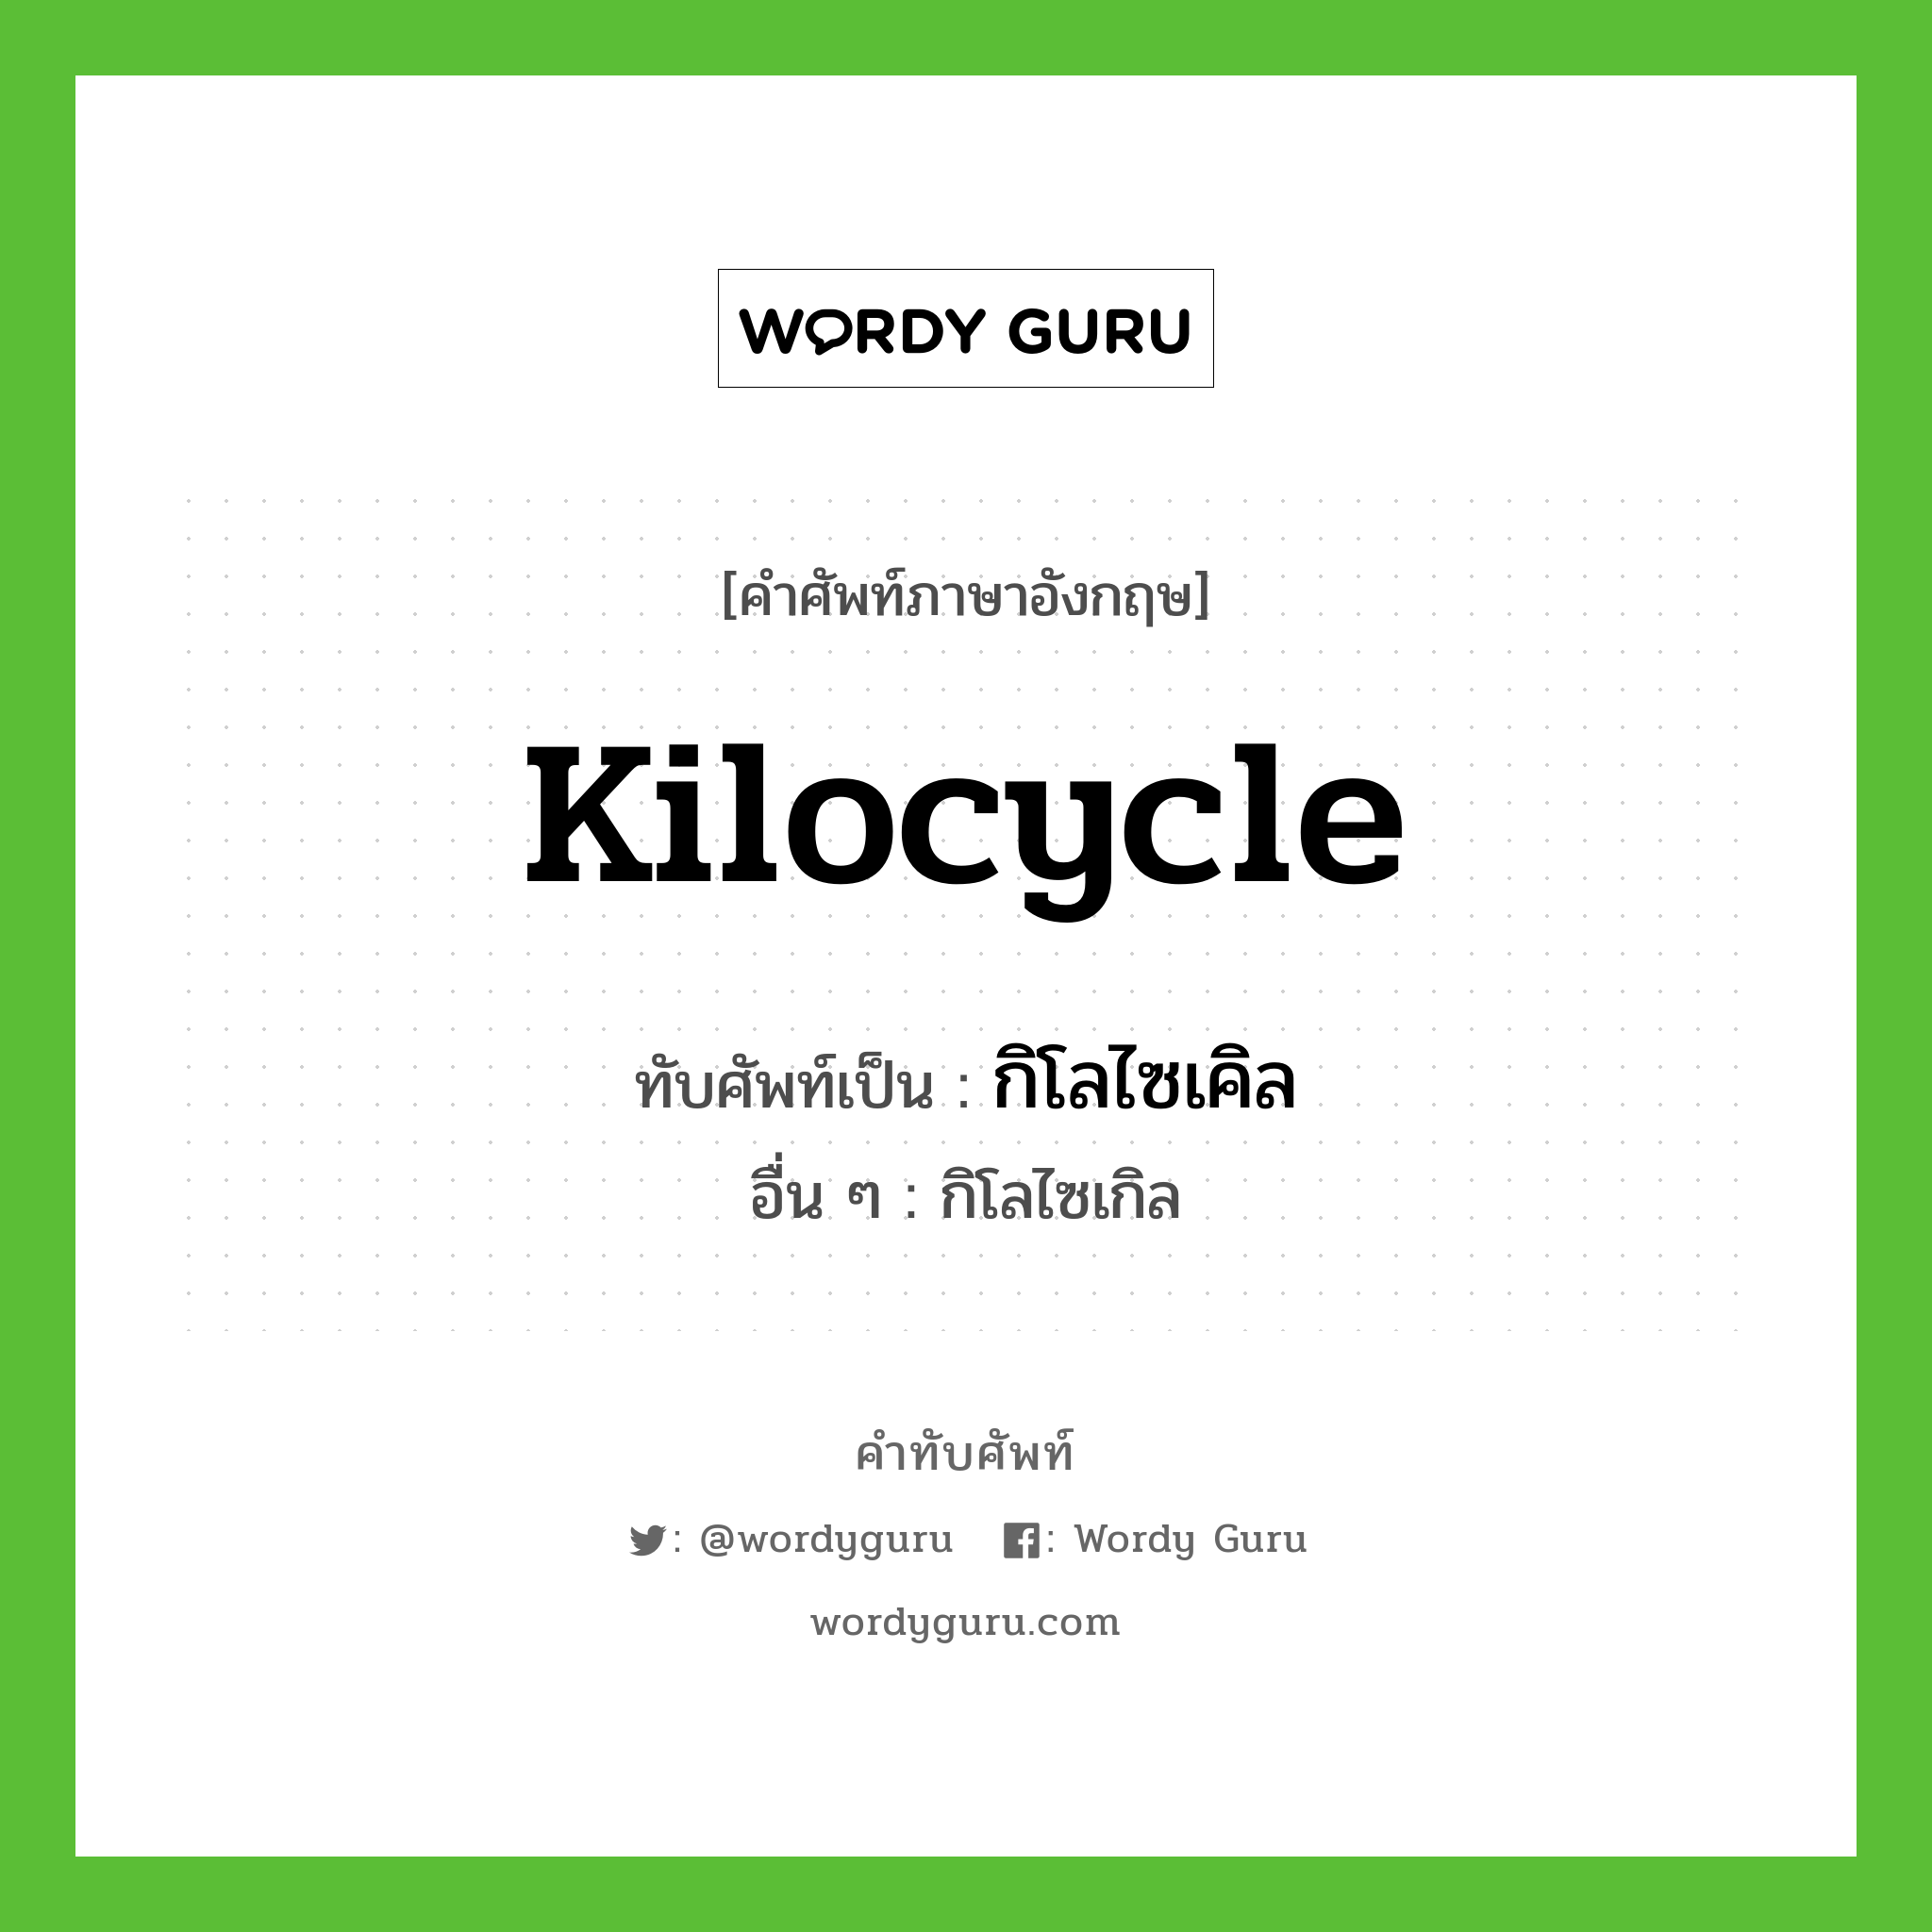 kilocycle เขียนเป็นคำไทยว่าอะไร?, คำศัพท์ภาษาอังกฤษ kilocycle ทับศัพท์เป็น กิโลไซเคิล อื่น ๆ กิโลไซเกิล